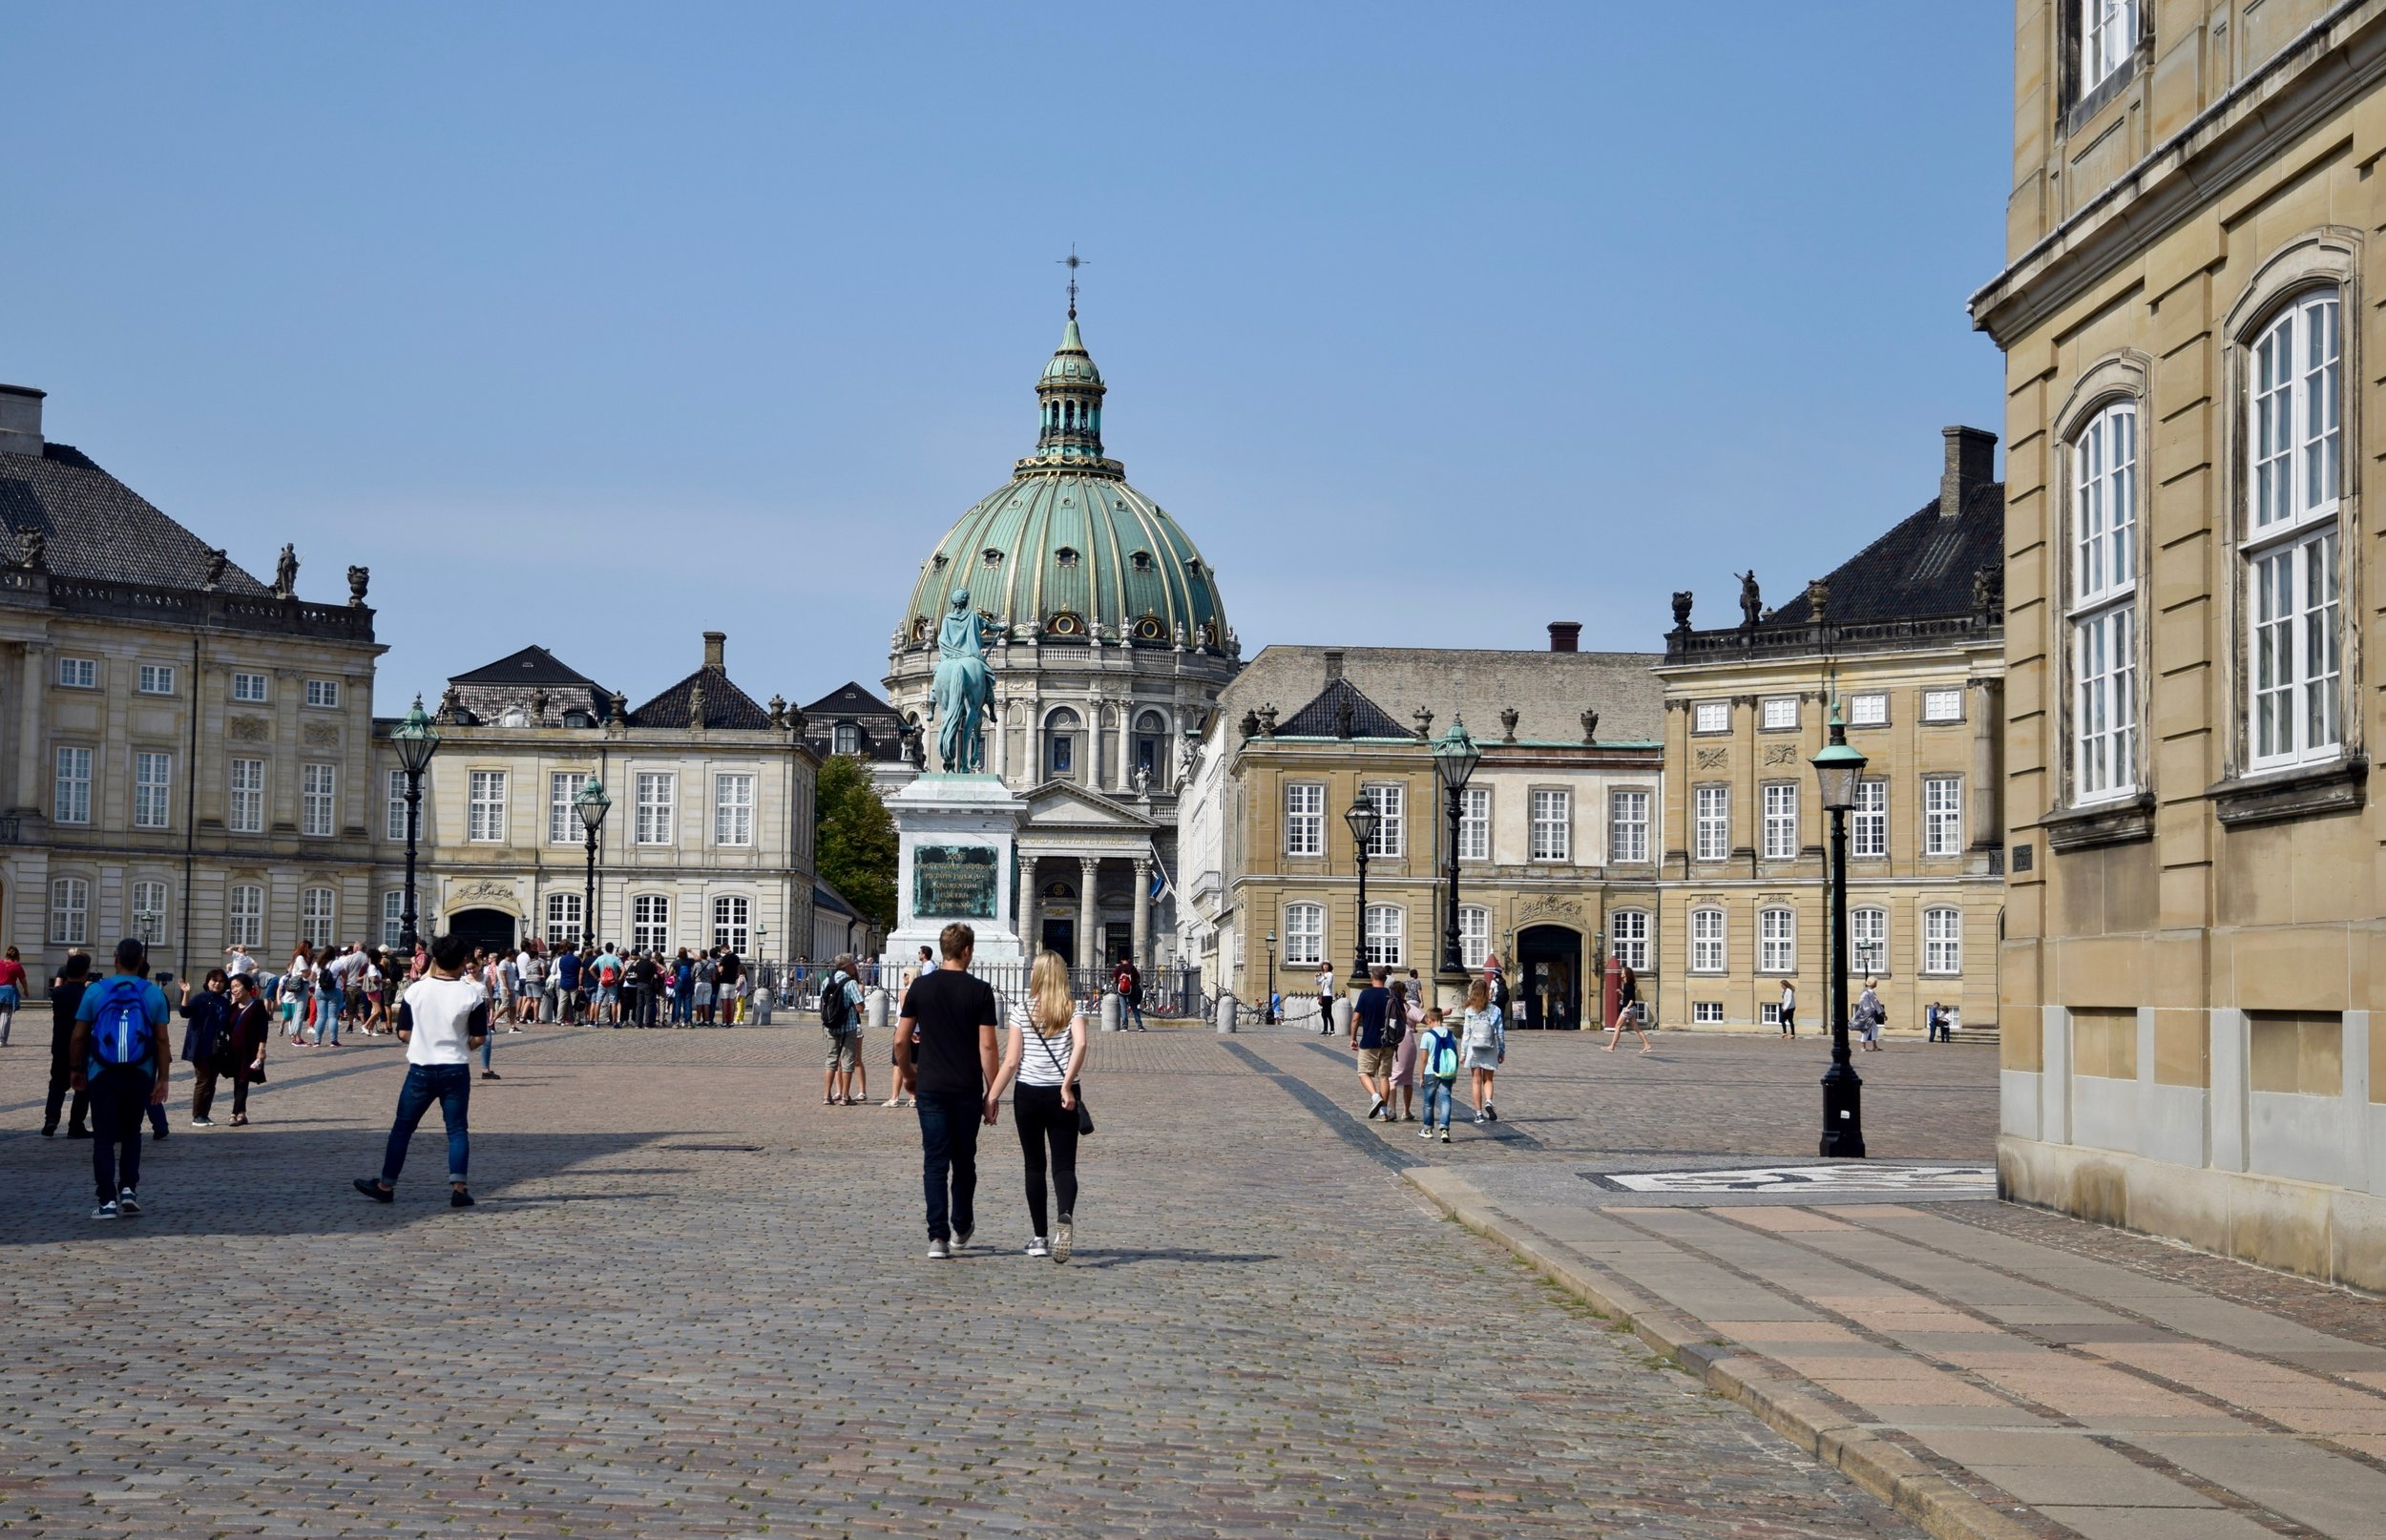 The Square at Amalienborg